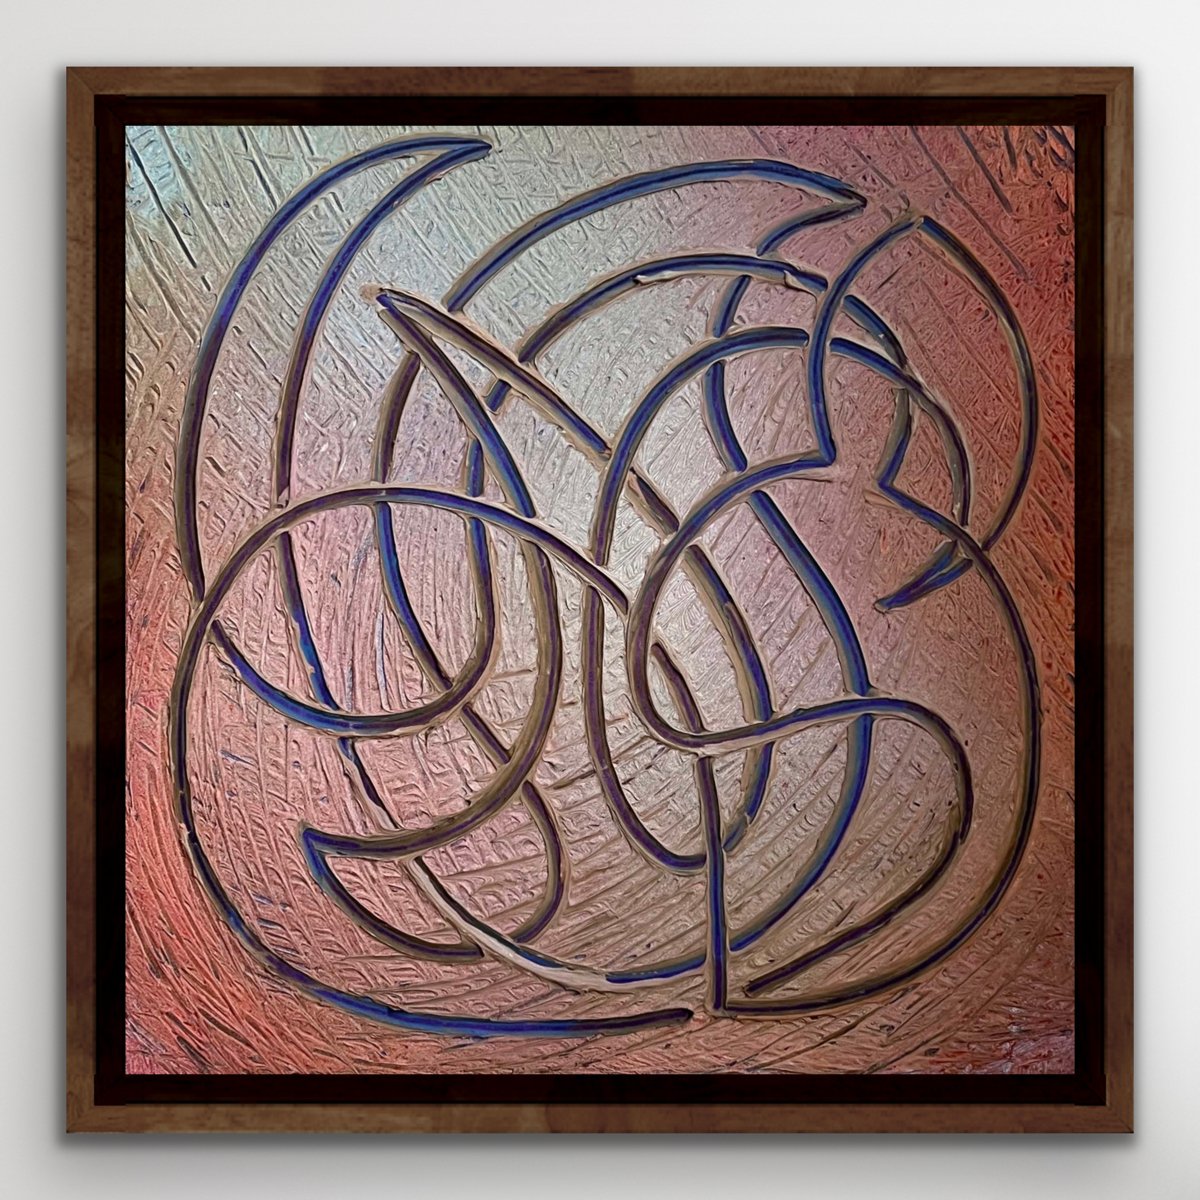   Moonlit Stroll  latex on canvas 24” x 24” unframed 